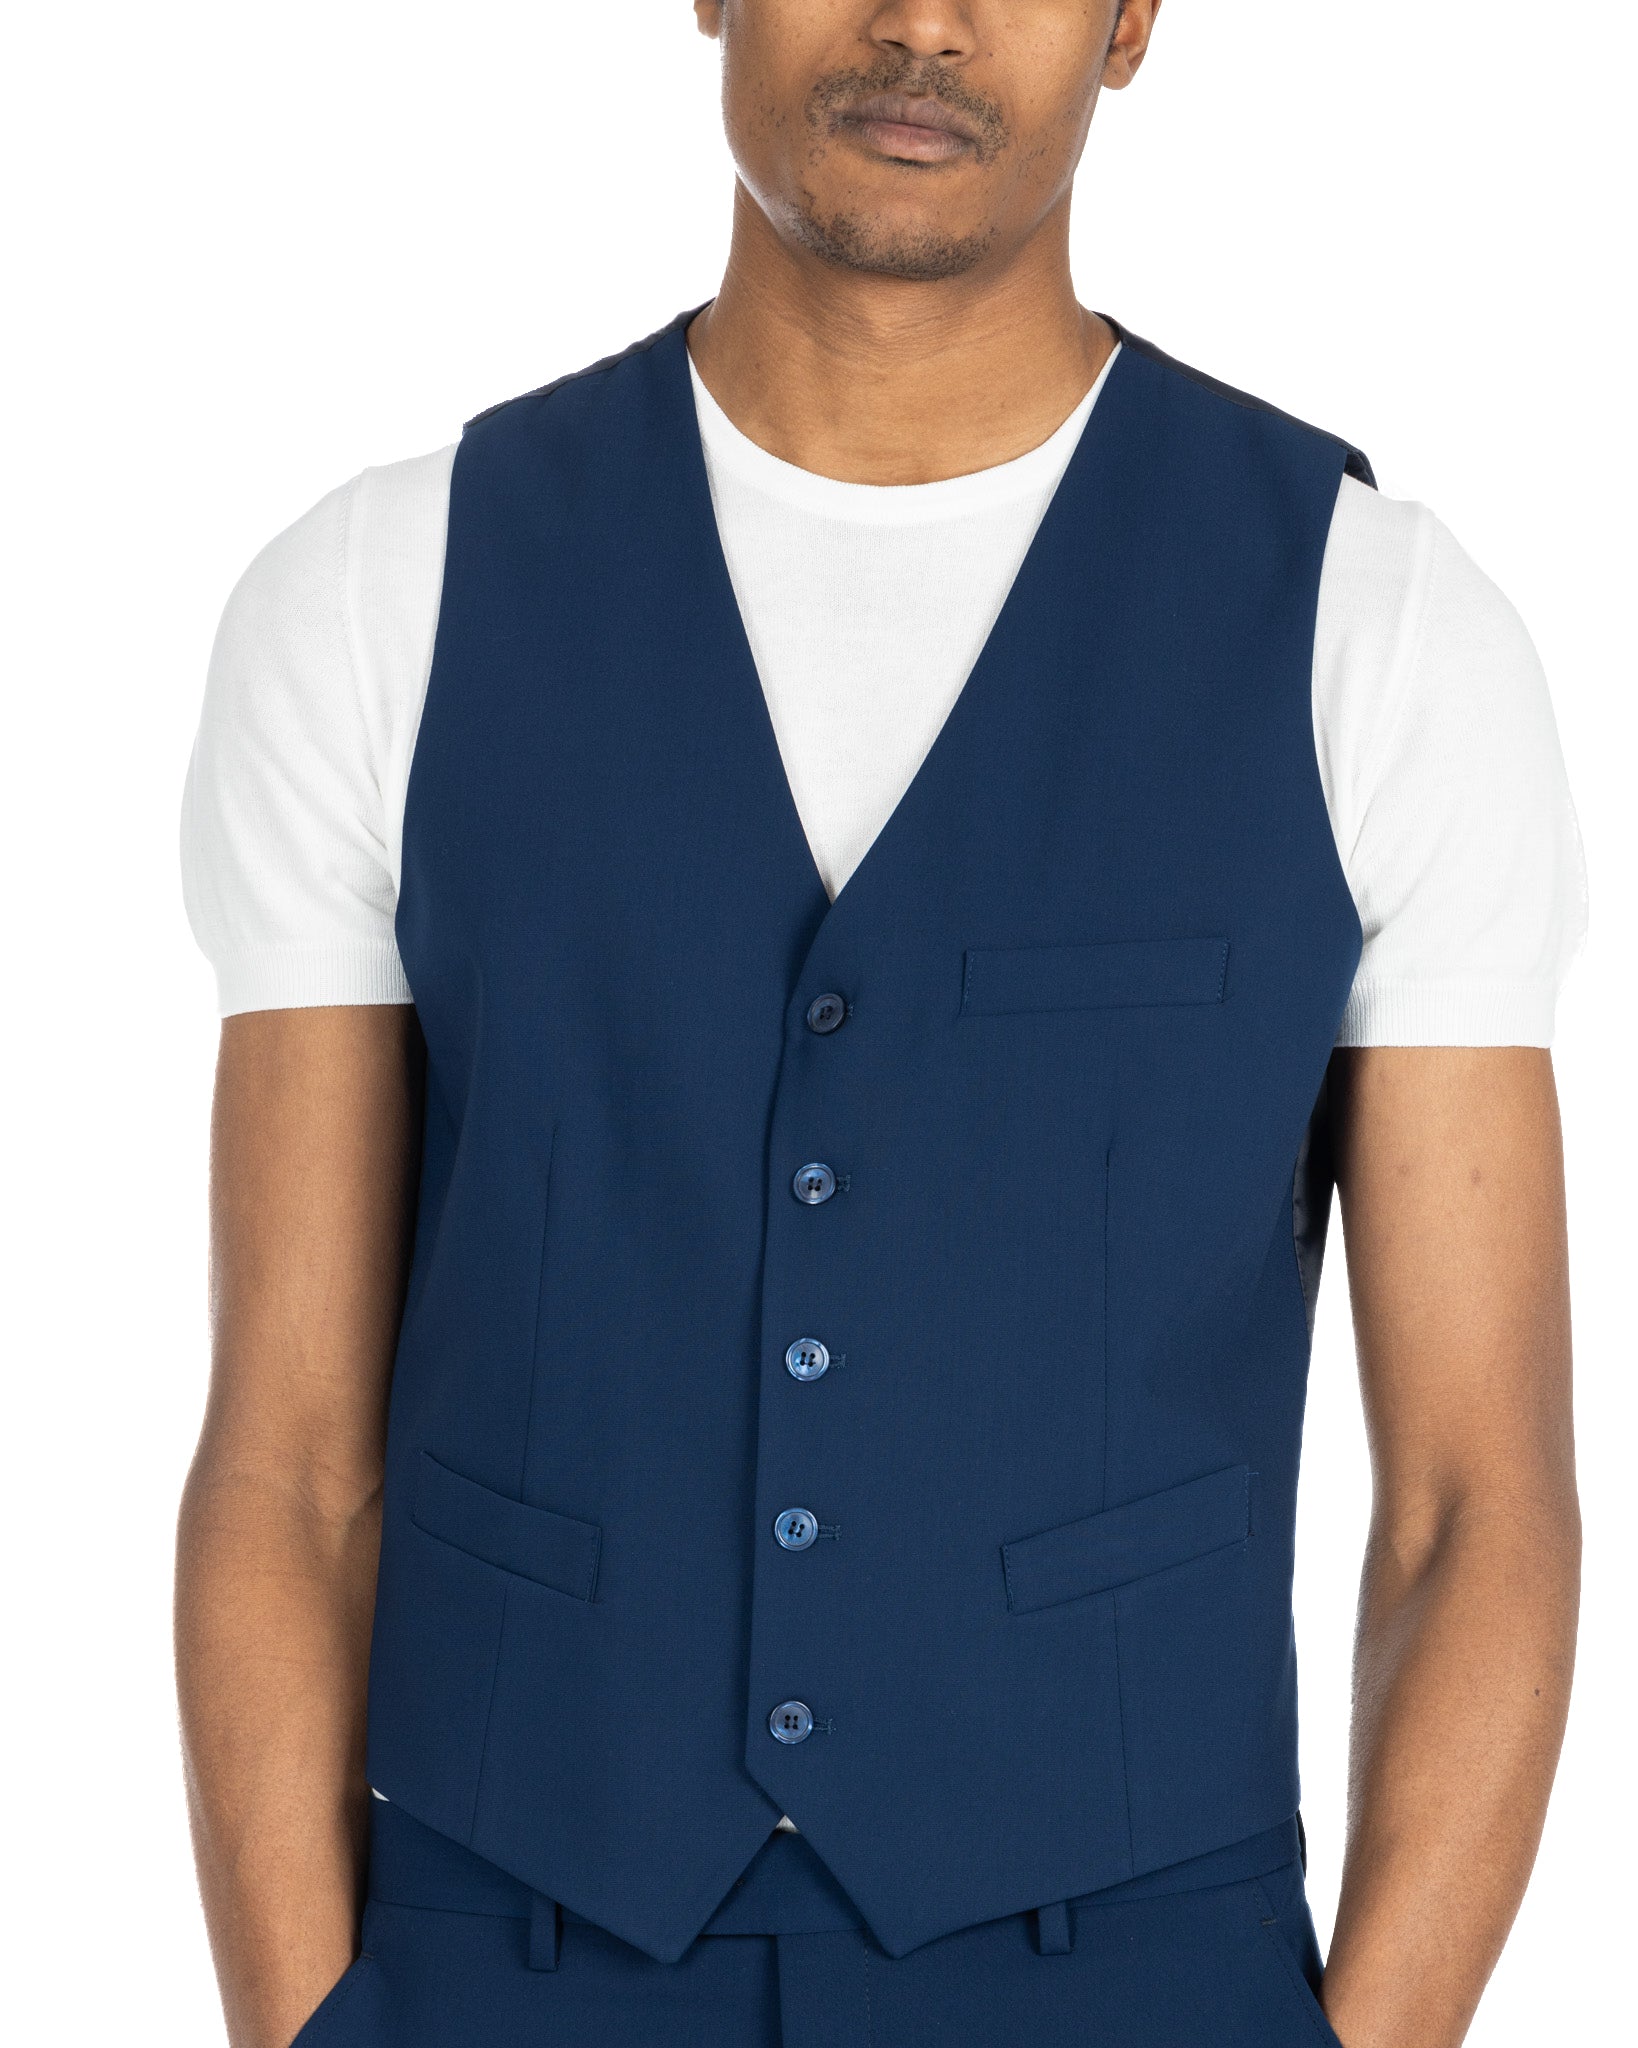 Dresden - blue single-breasted waistcoat